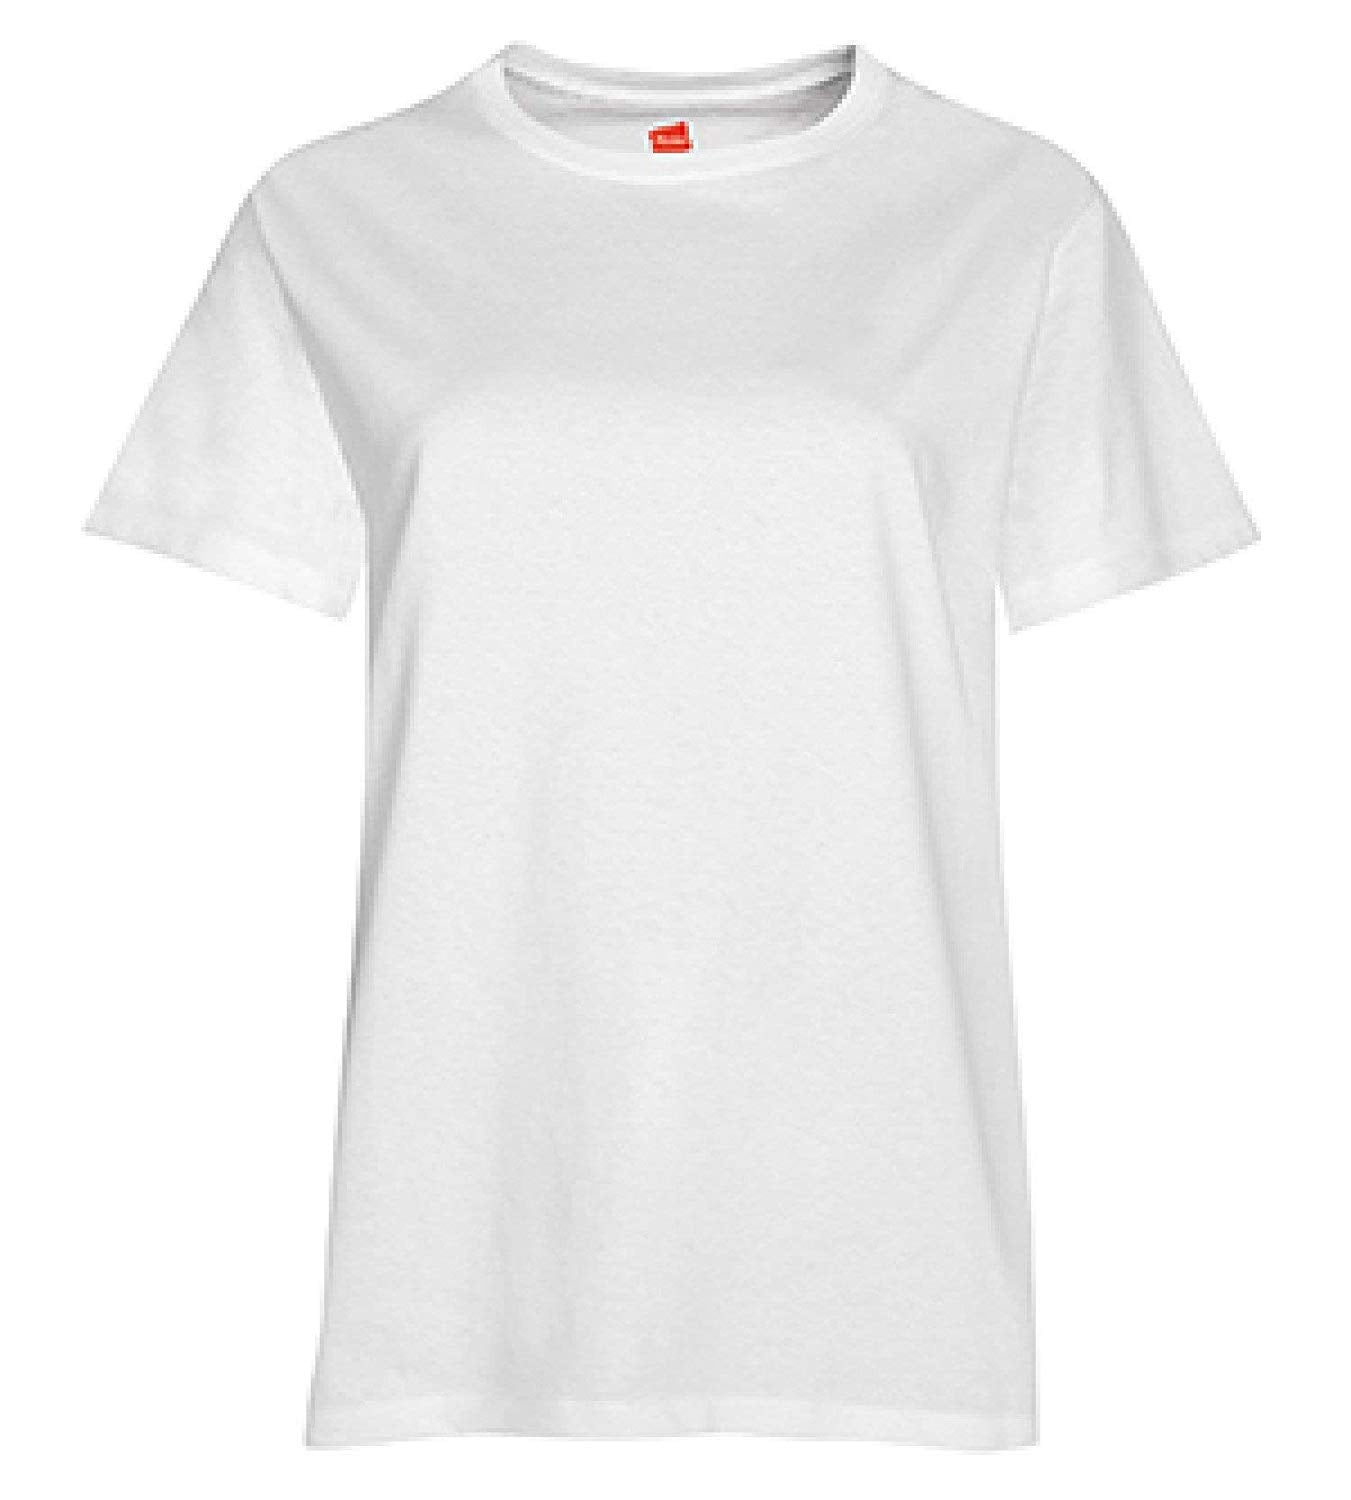 Norm Landsdækkende entanglement Best Plain Comfortable White T-Shirt for Women in 2021 | POPSUGAR Fashion